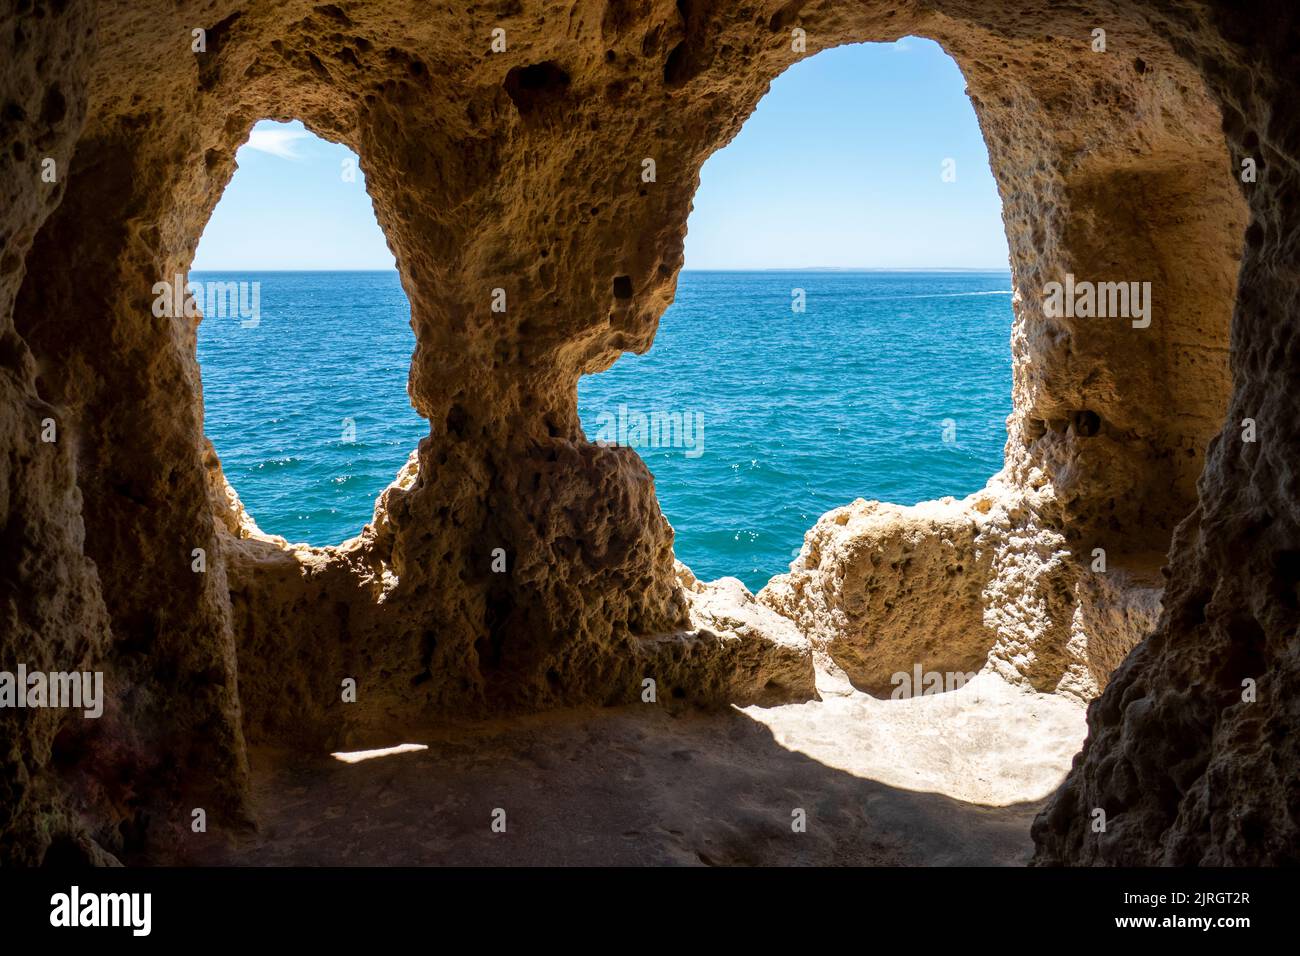 The natural caves exists in Algar Seco, Carvoeiro, Algarve - Portugal Stock Photo